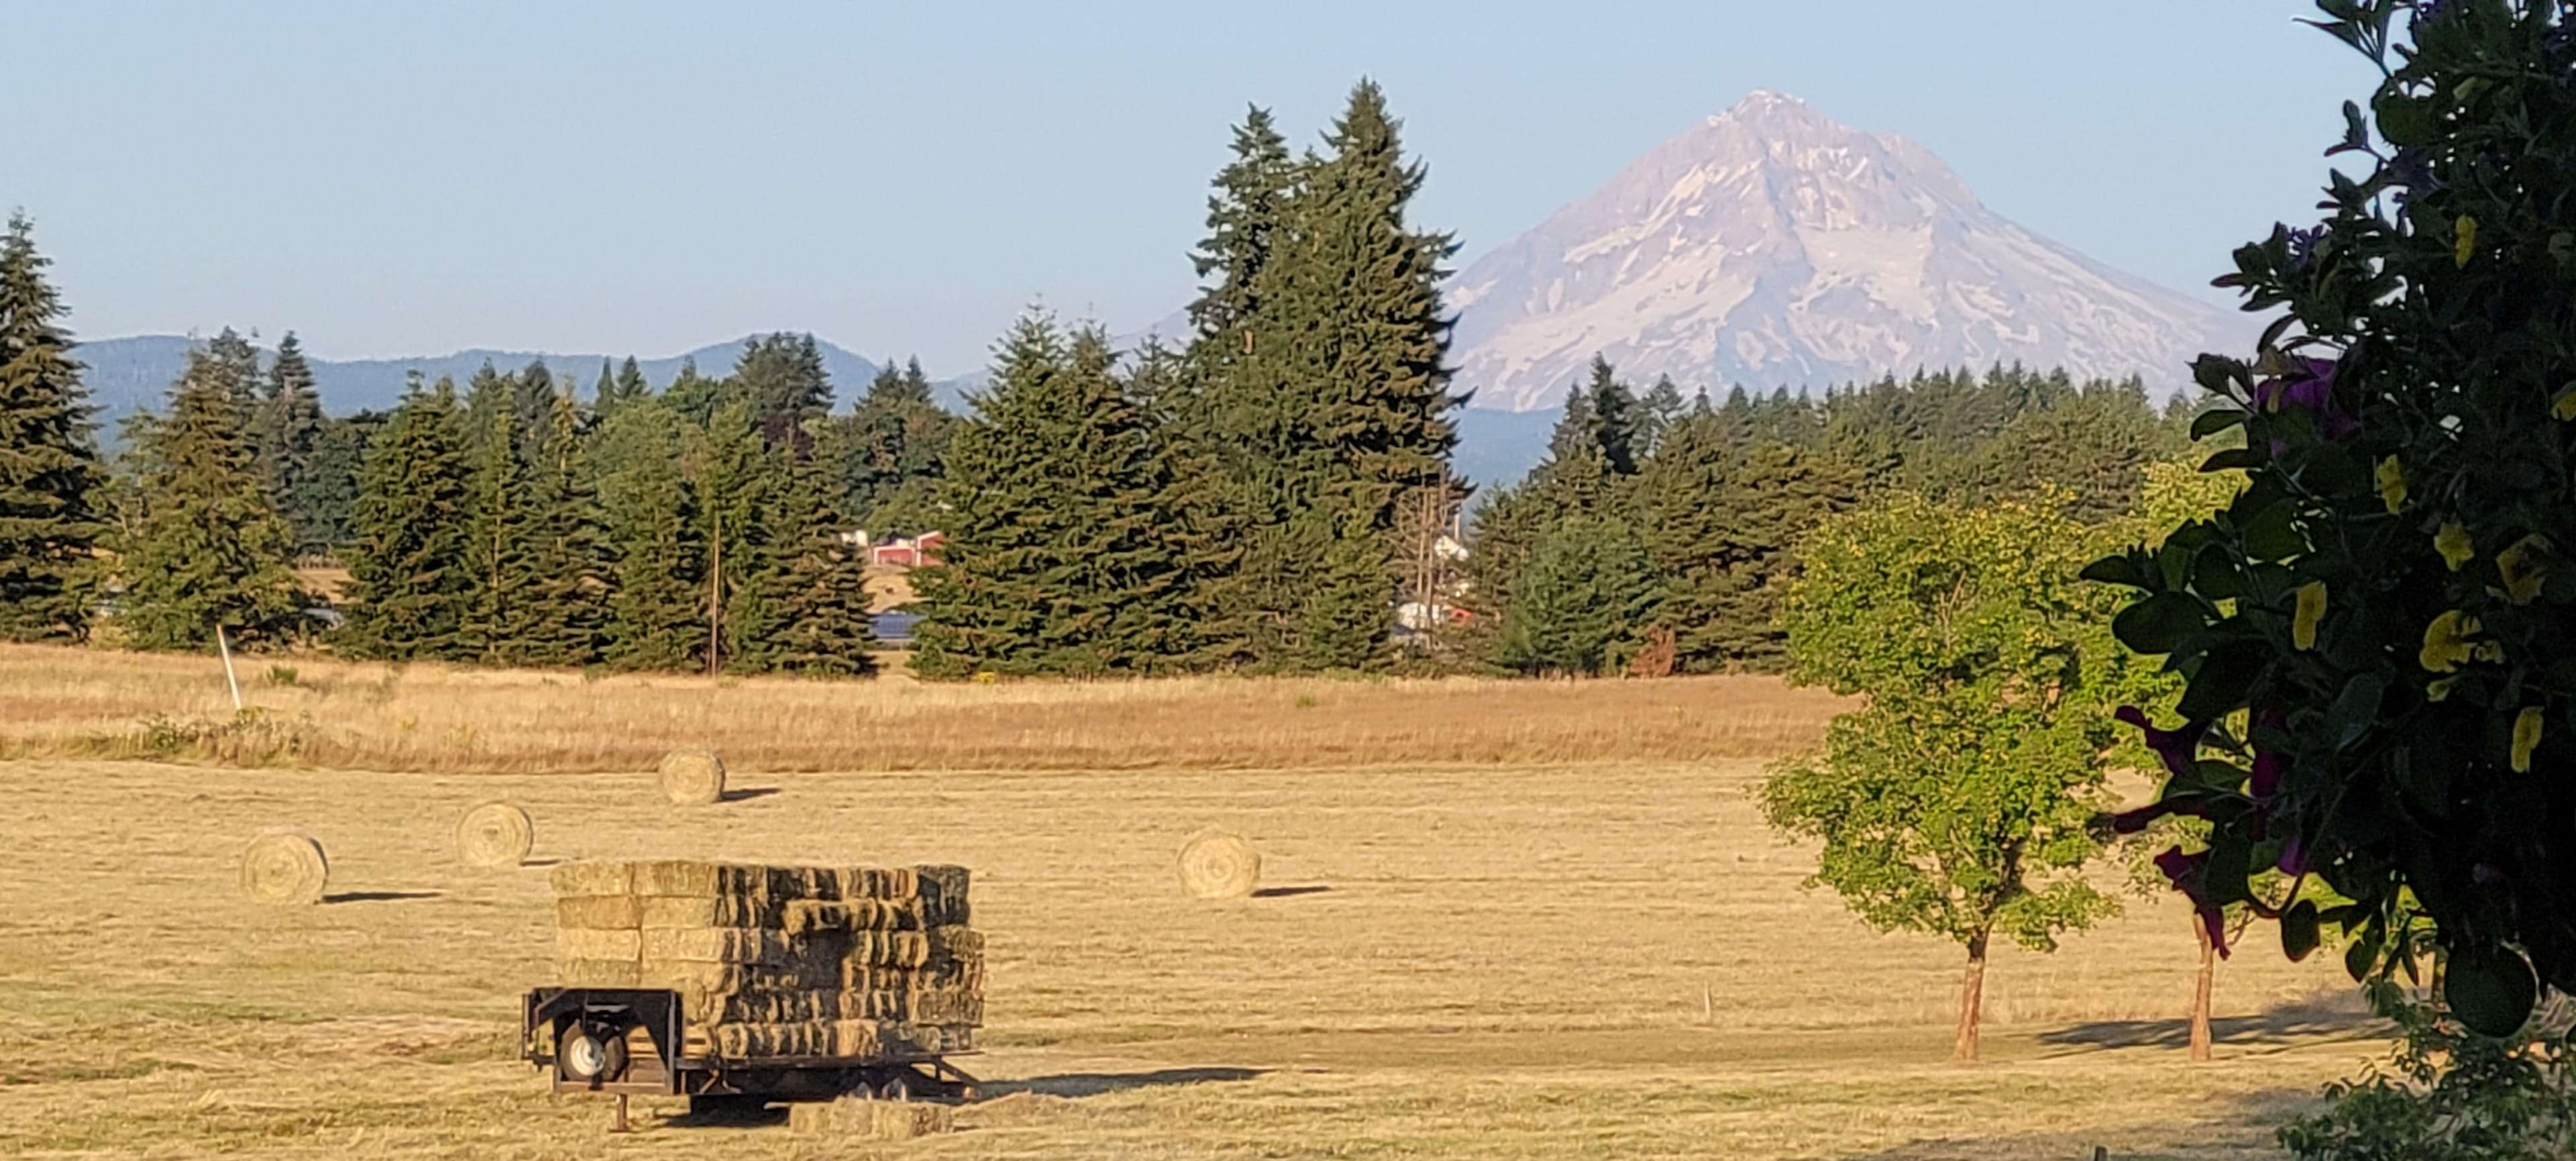 Fresh cut hay from neighbors field